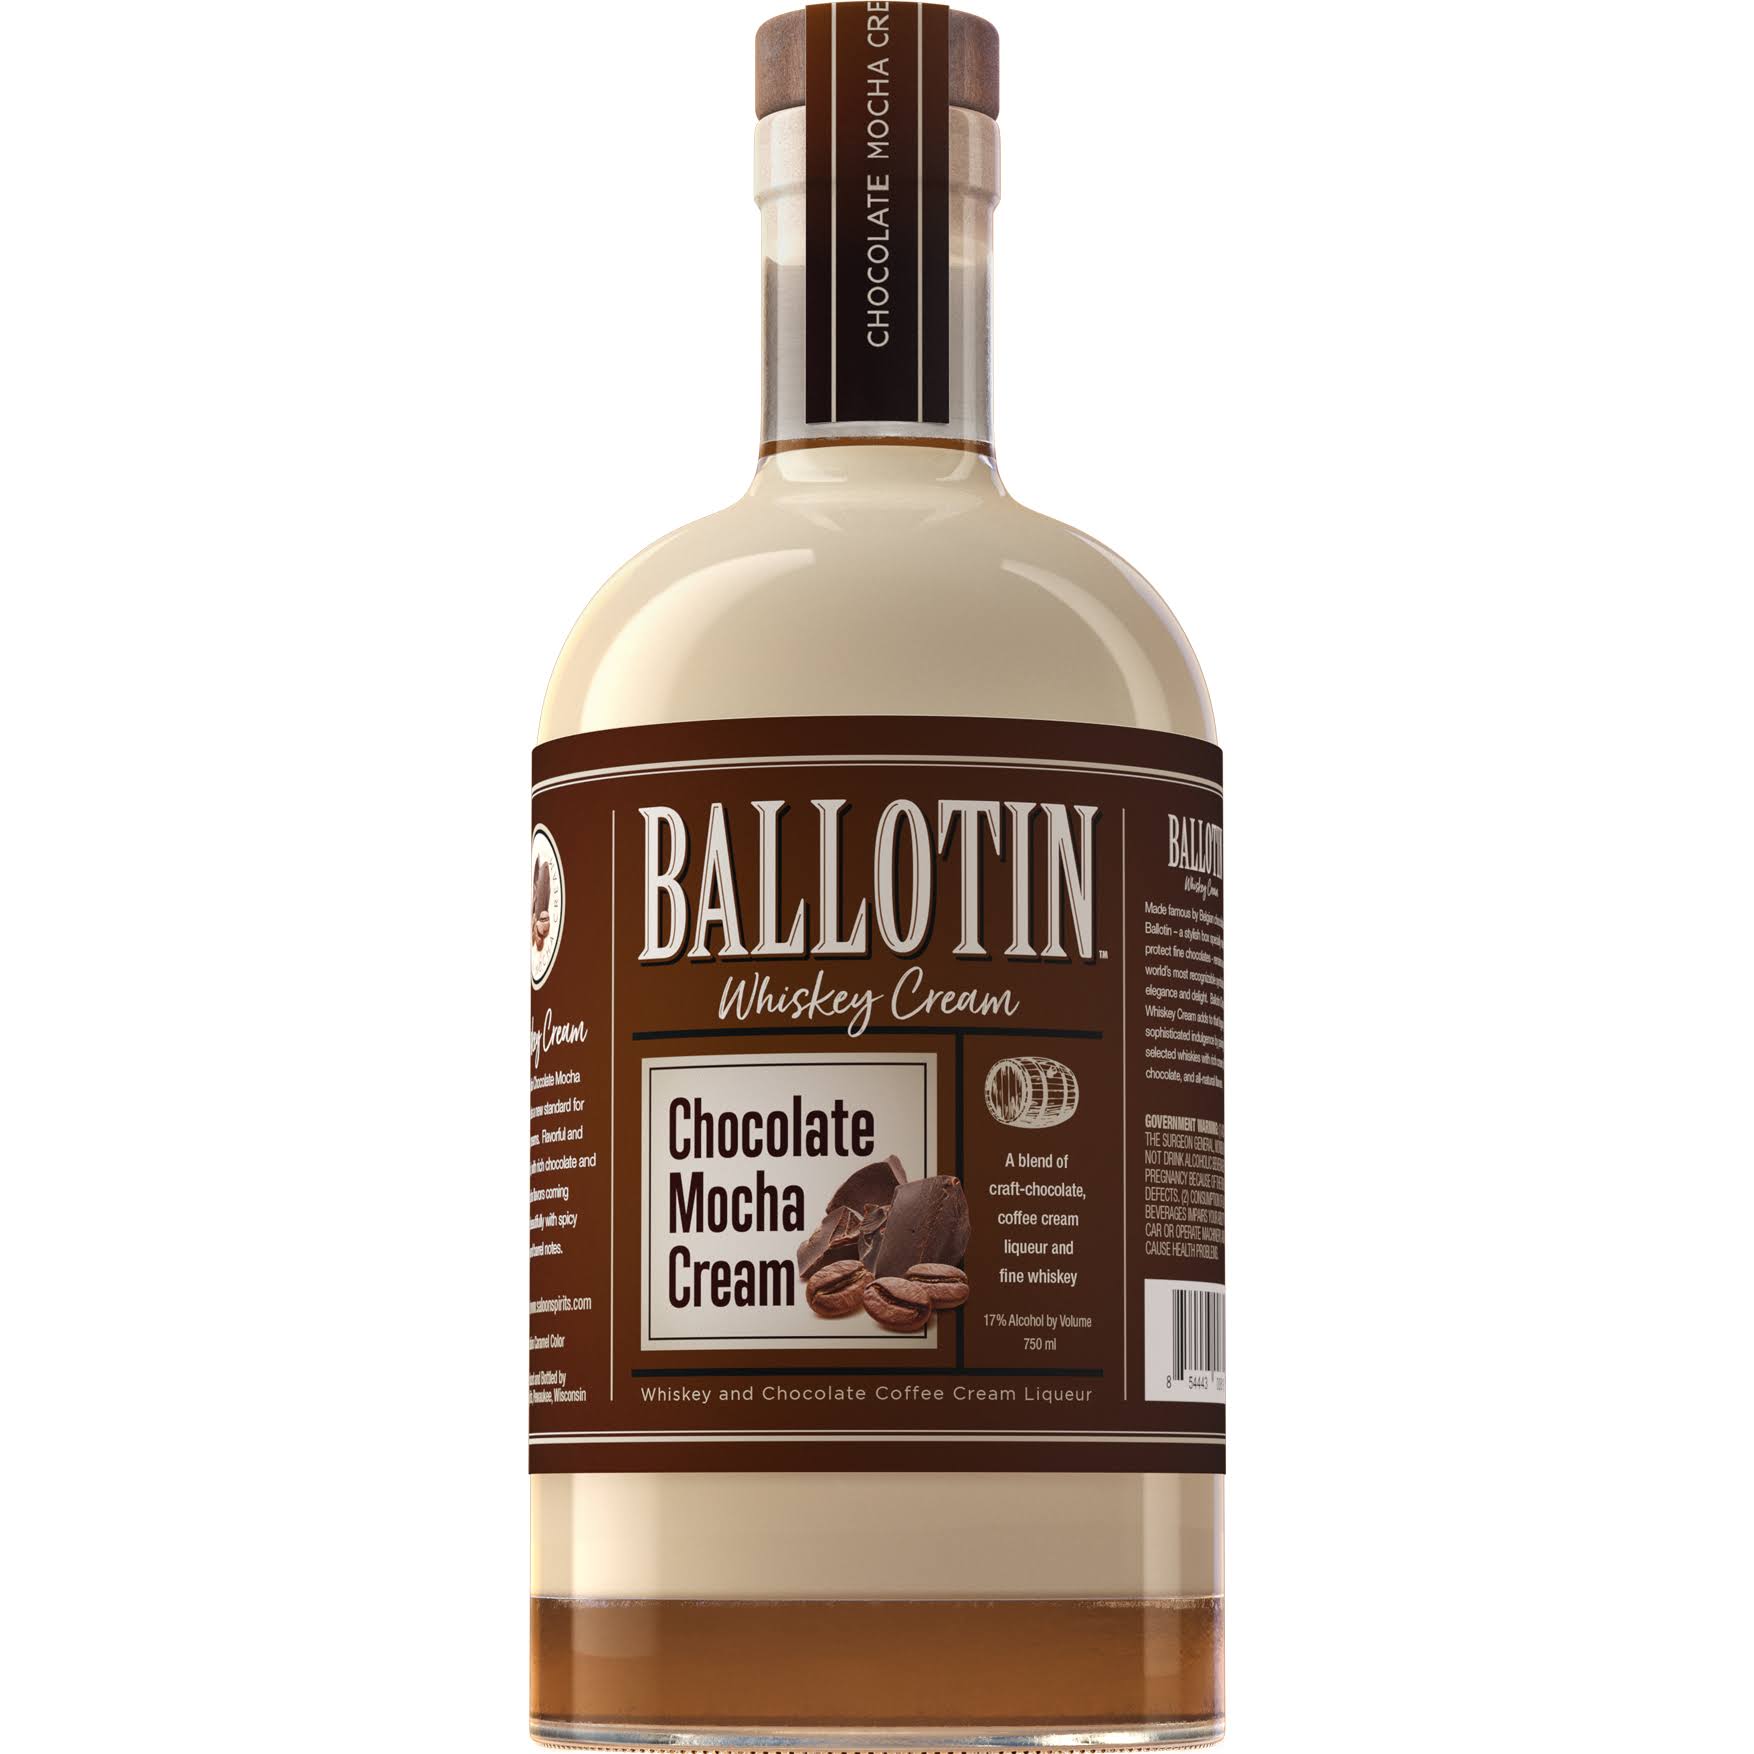 Ballotin Whiskey Cream, Chocolate Mocha Cream - 750 ml